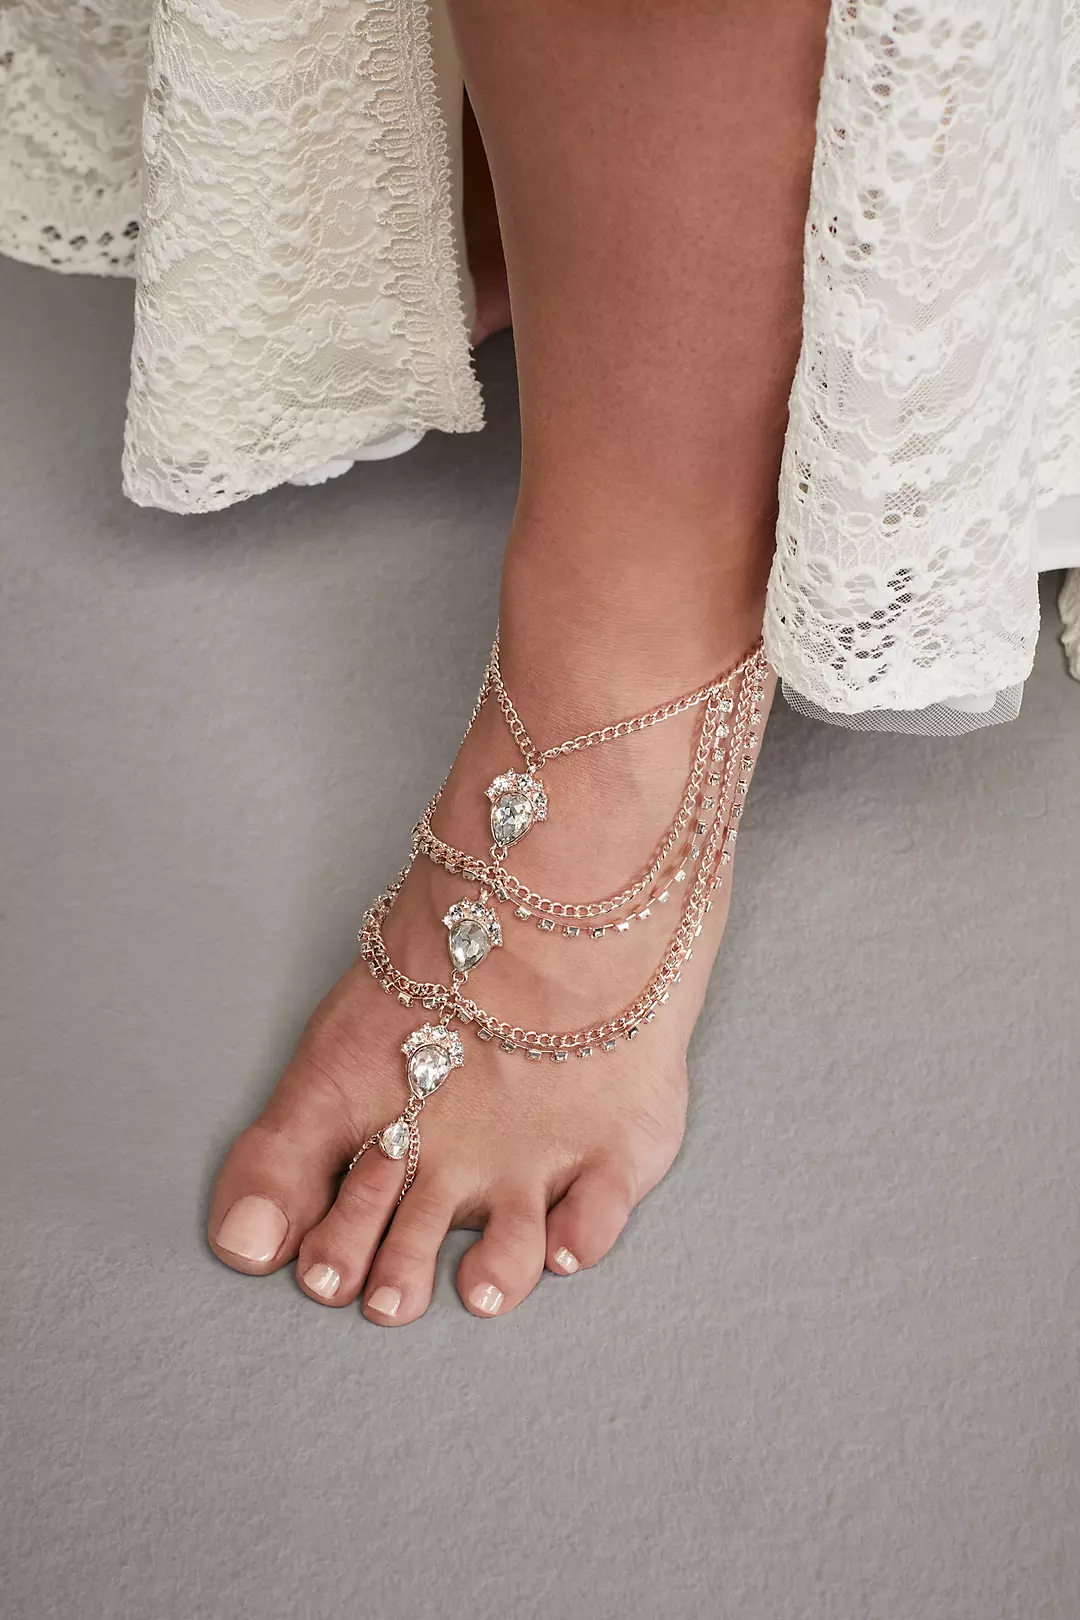 Crystal Embellished Wedding Foot Jewelry Image